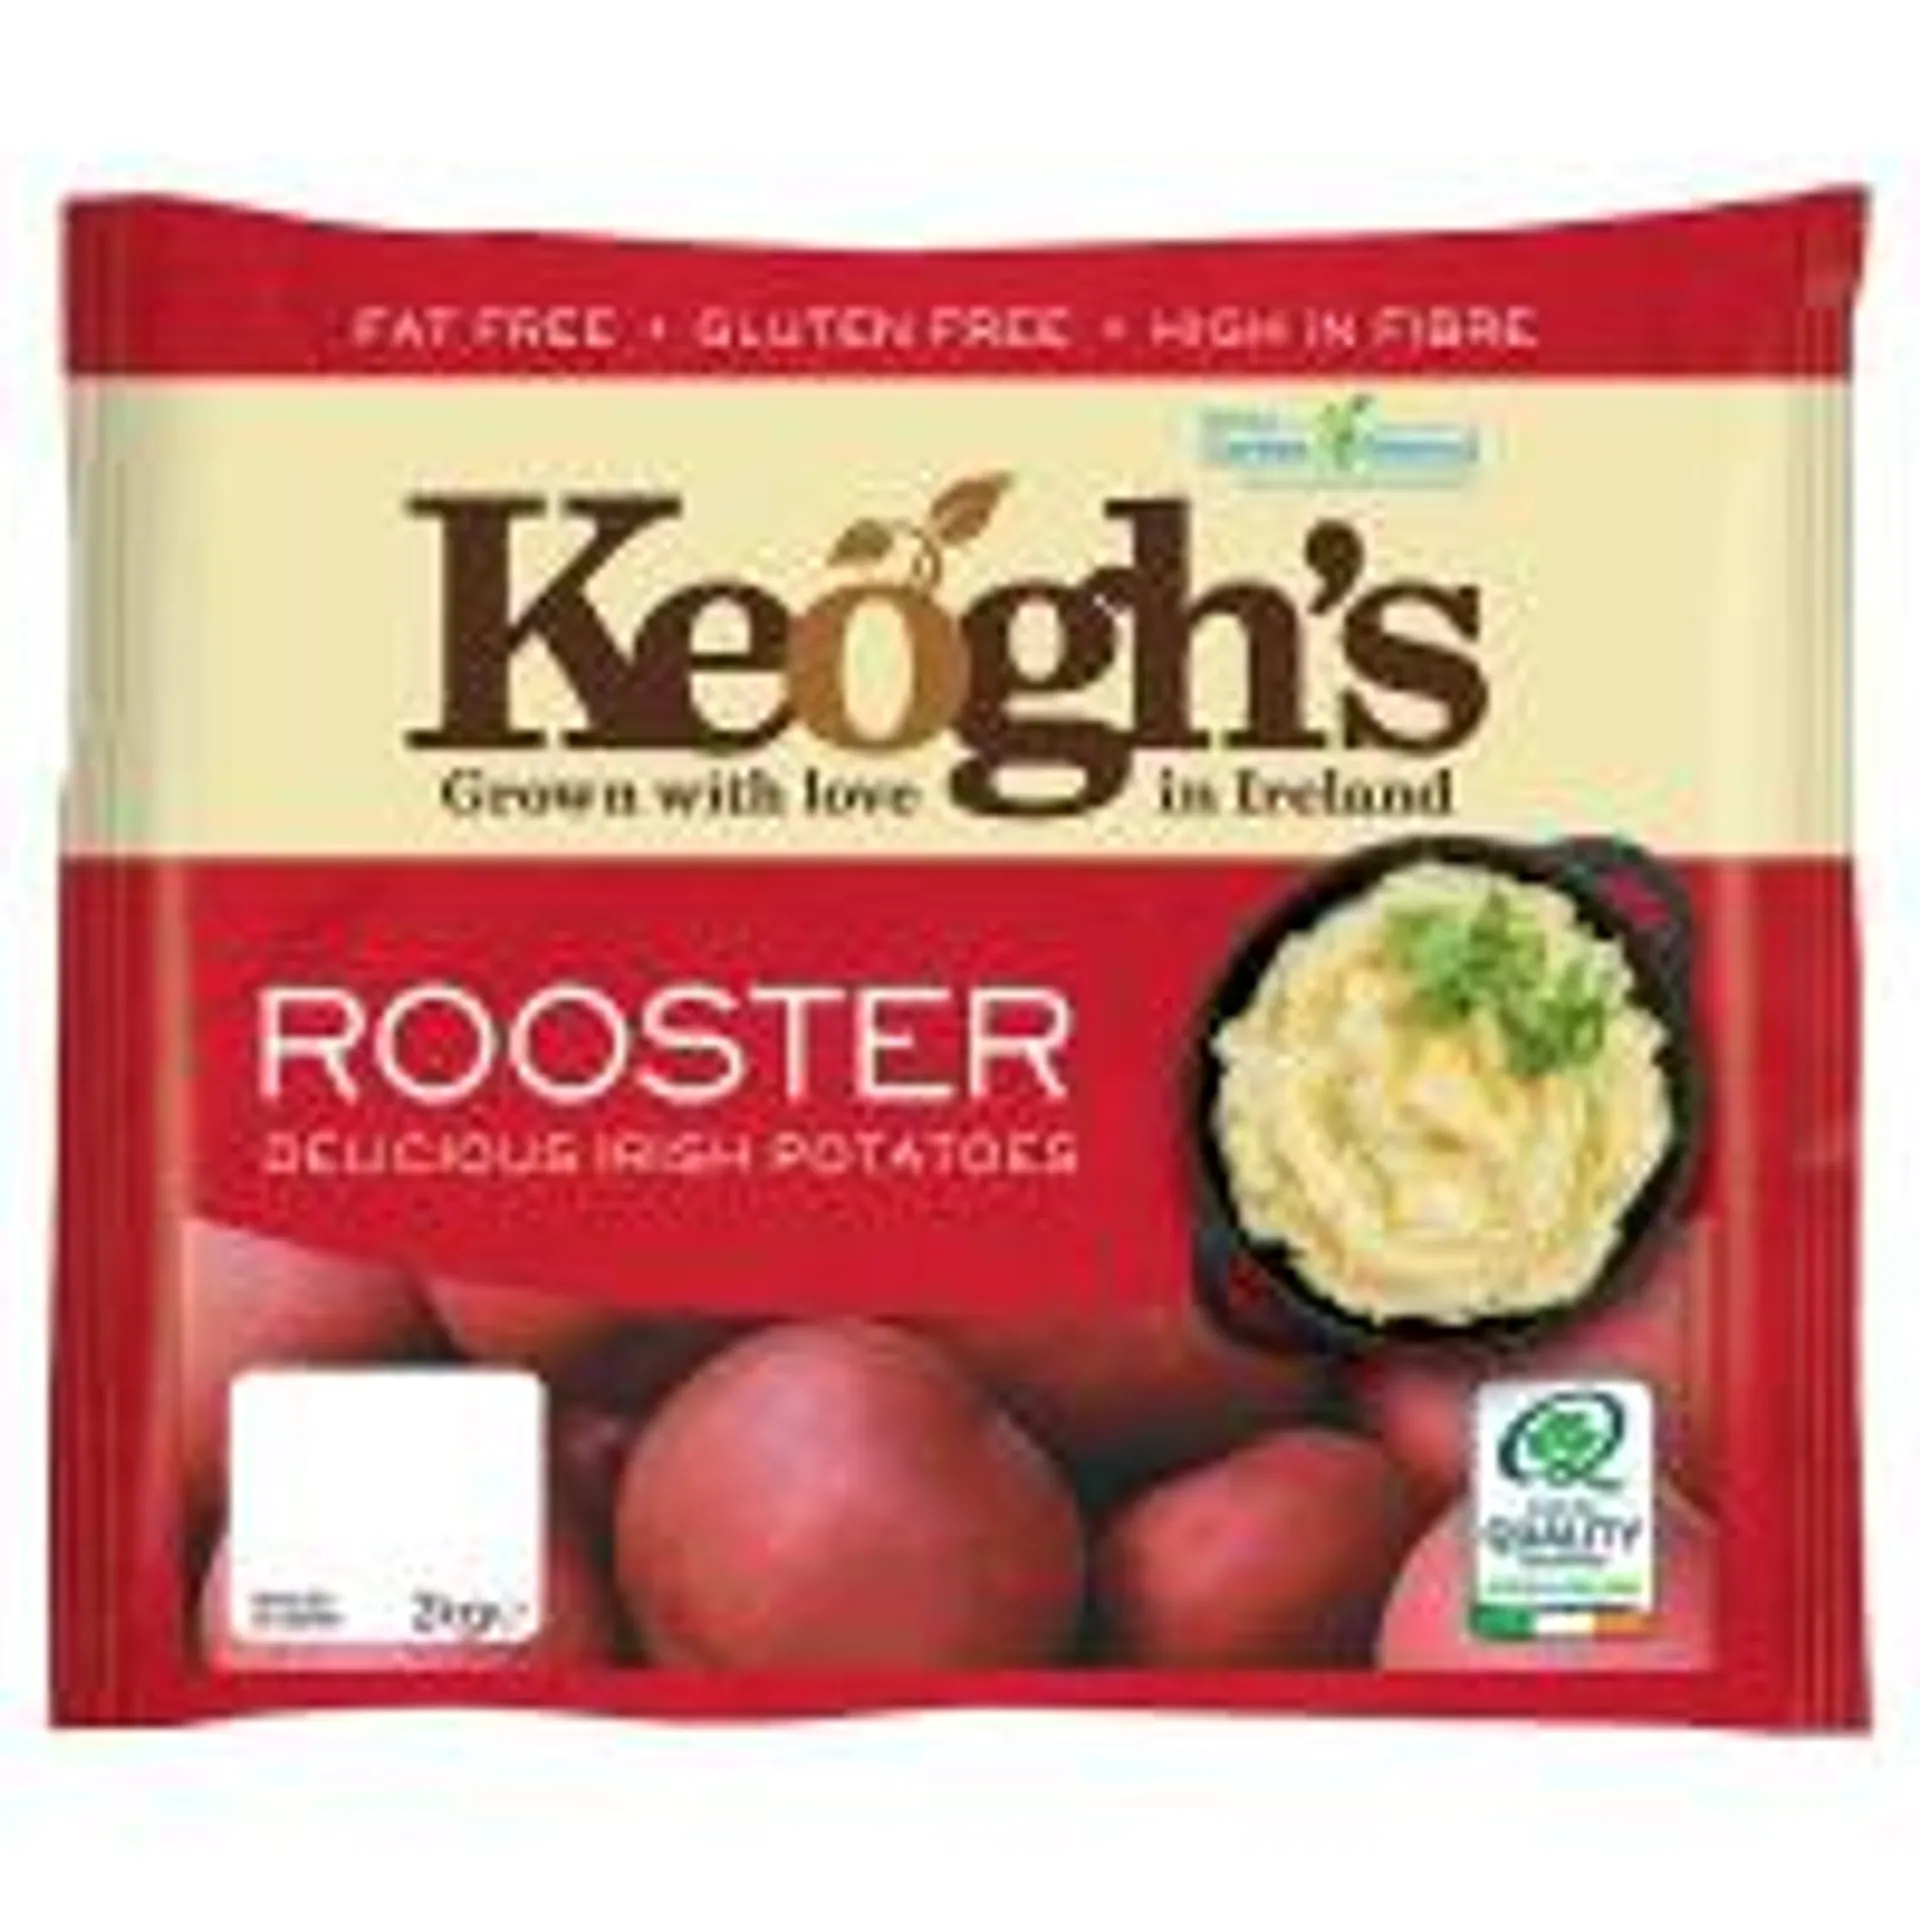 Keogh's Rooster Irish Potatoes (2 kg)